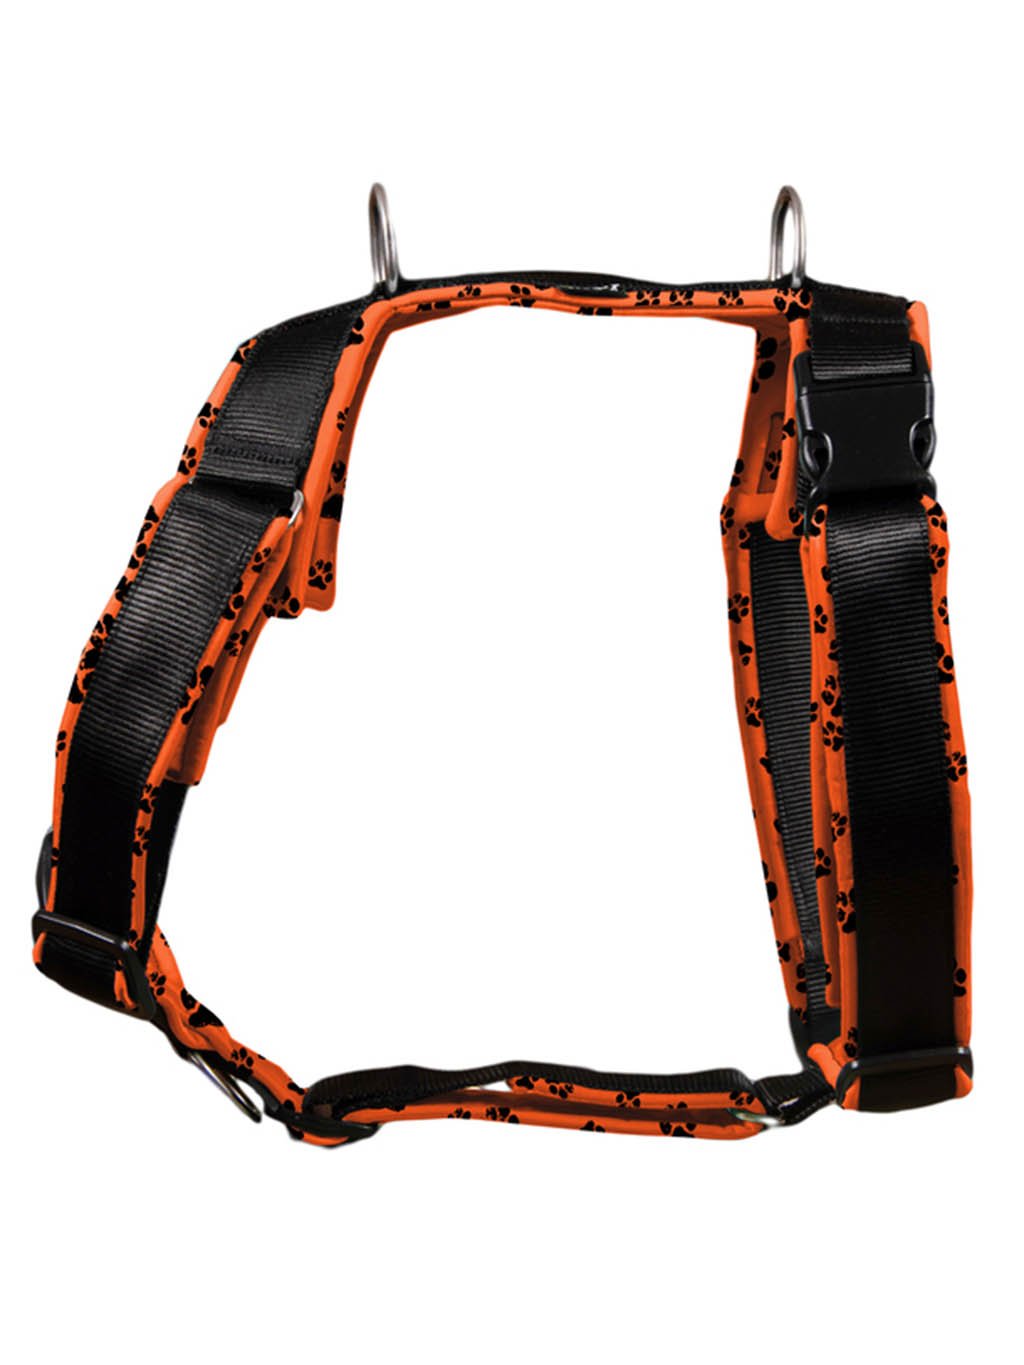 Comfort plus harness - neon orange with paws